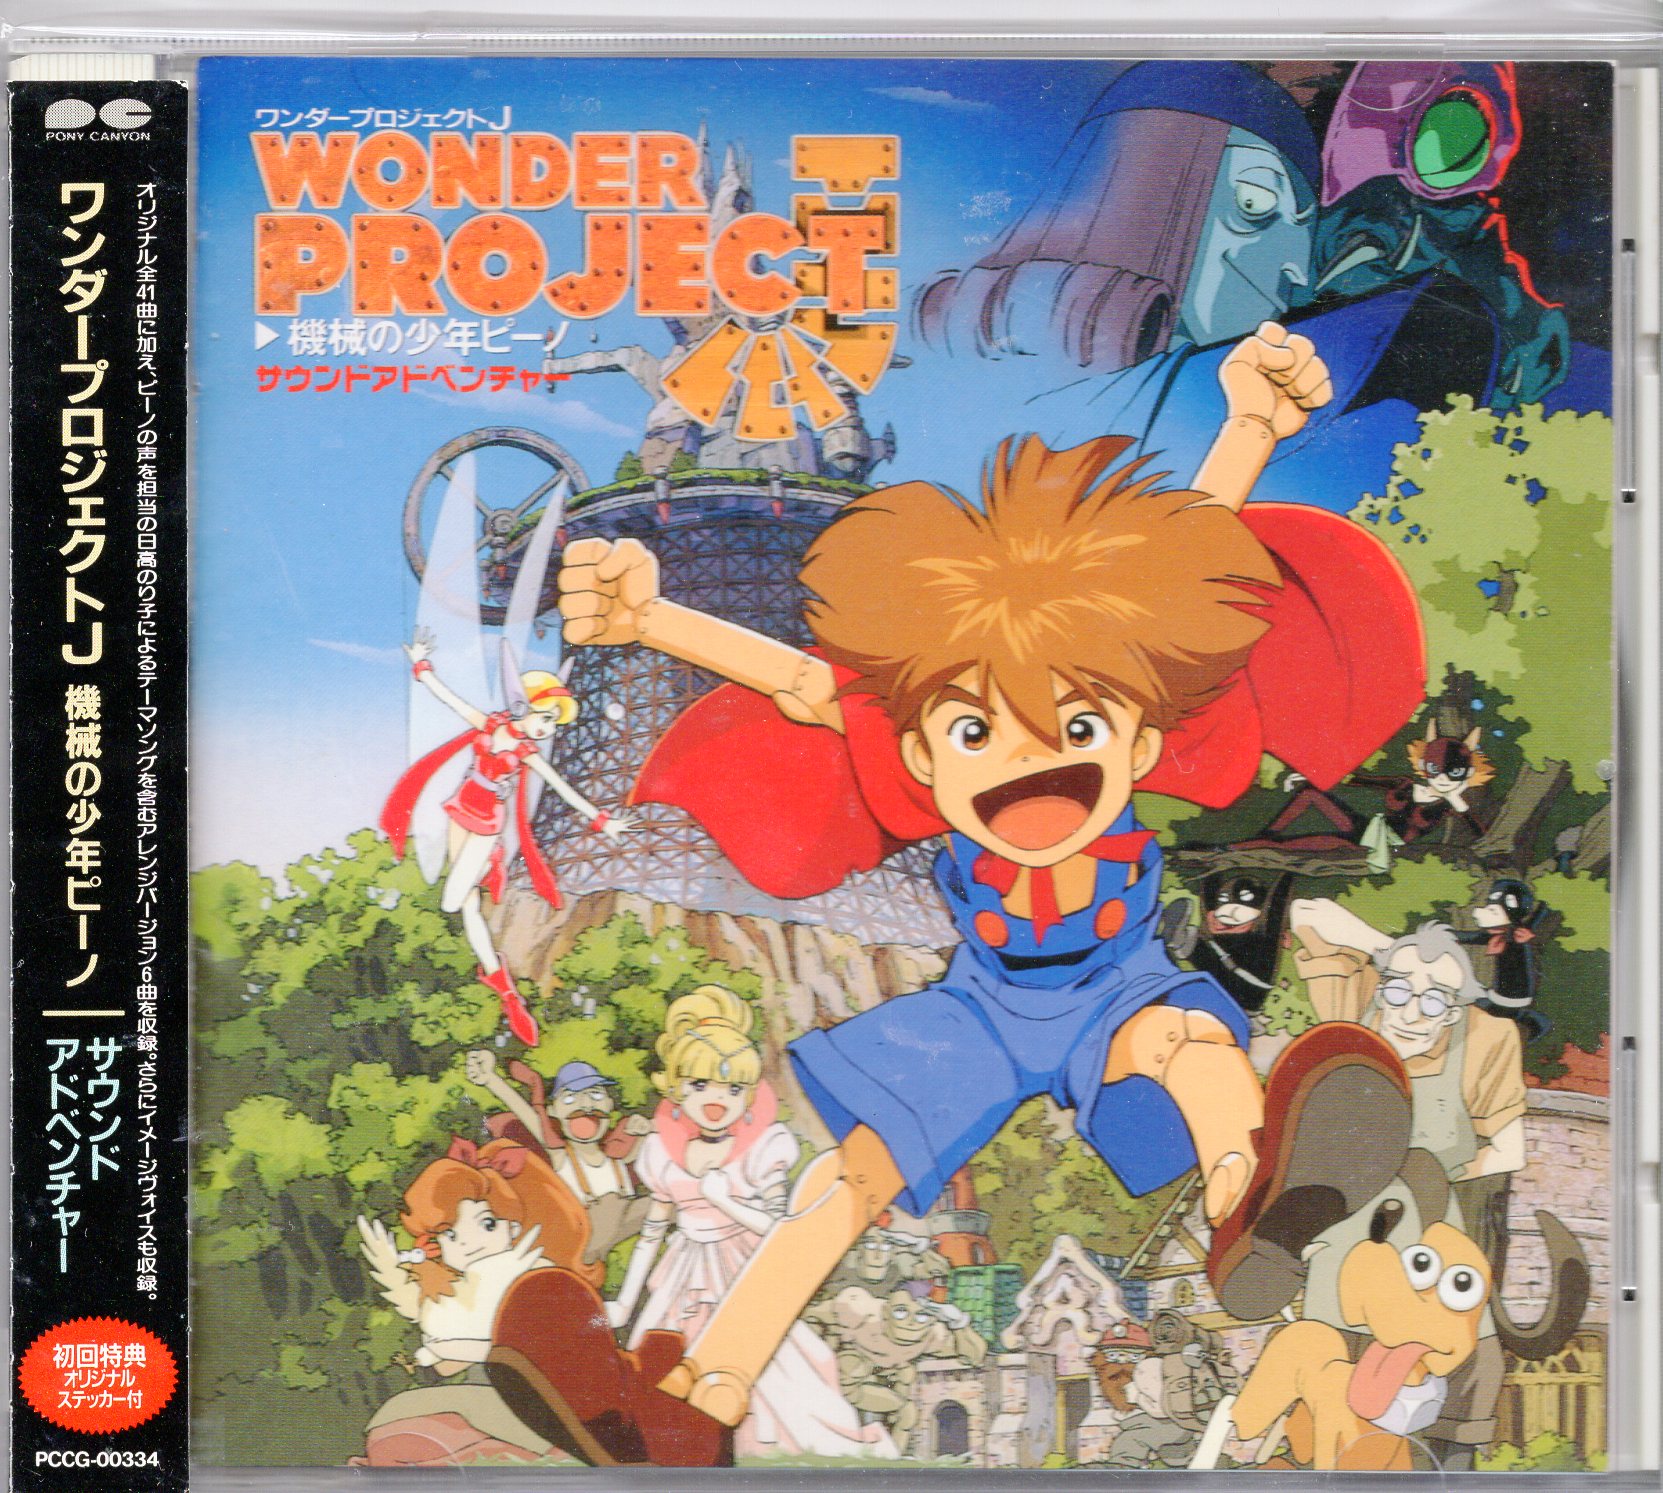 Of The Game Cd Wonder Project J Machine Shonen Pino Sound Adventure Mandarake Online Shop